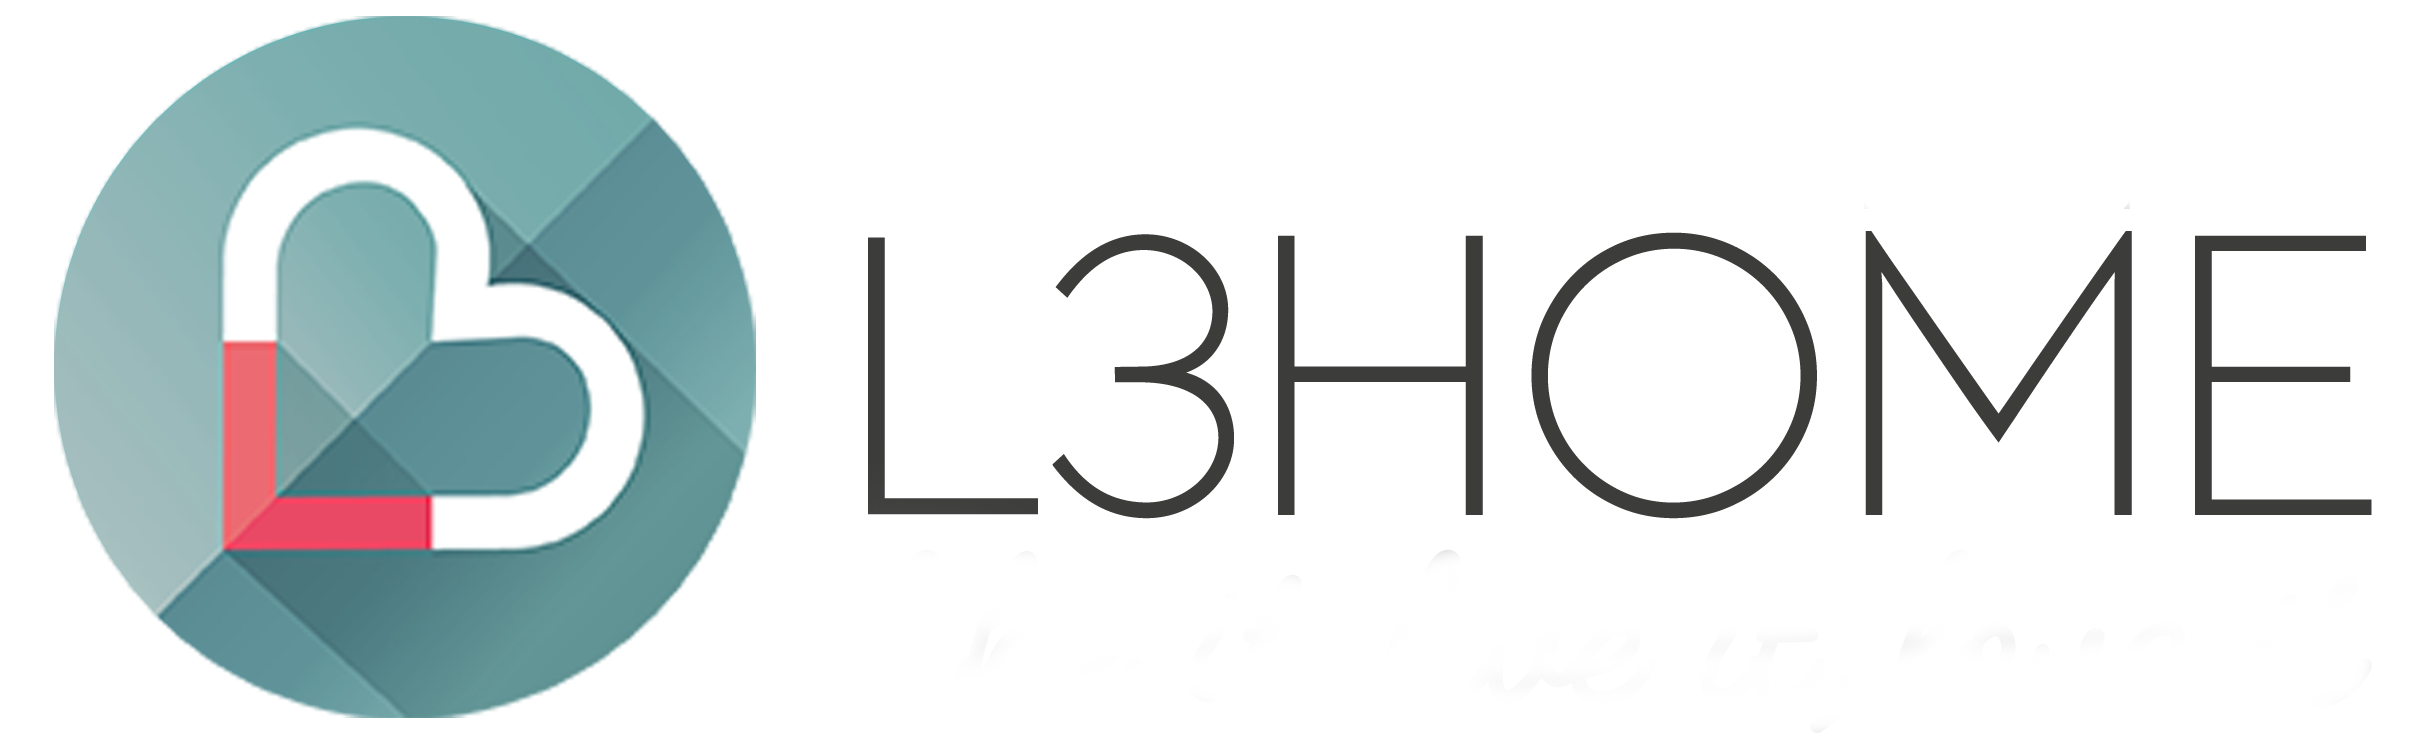 L3 Home logo